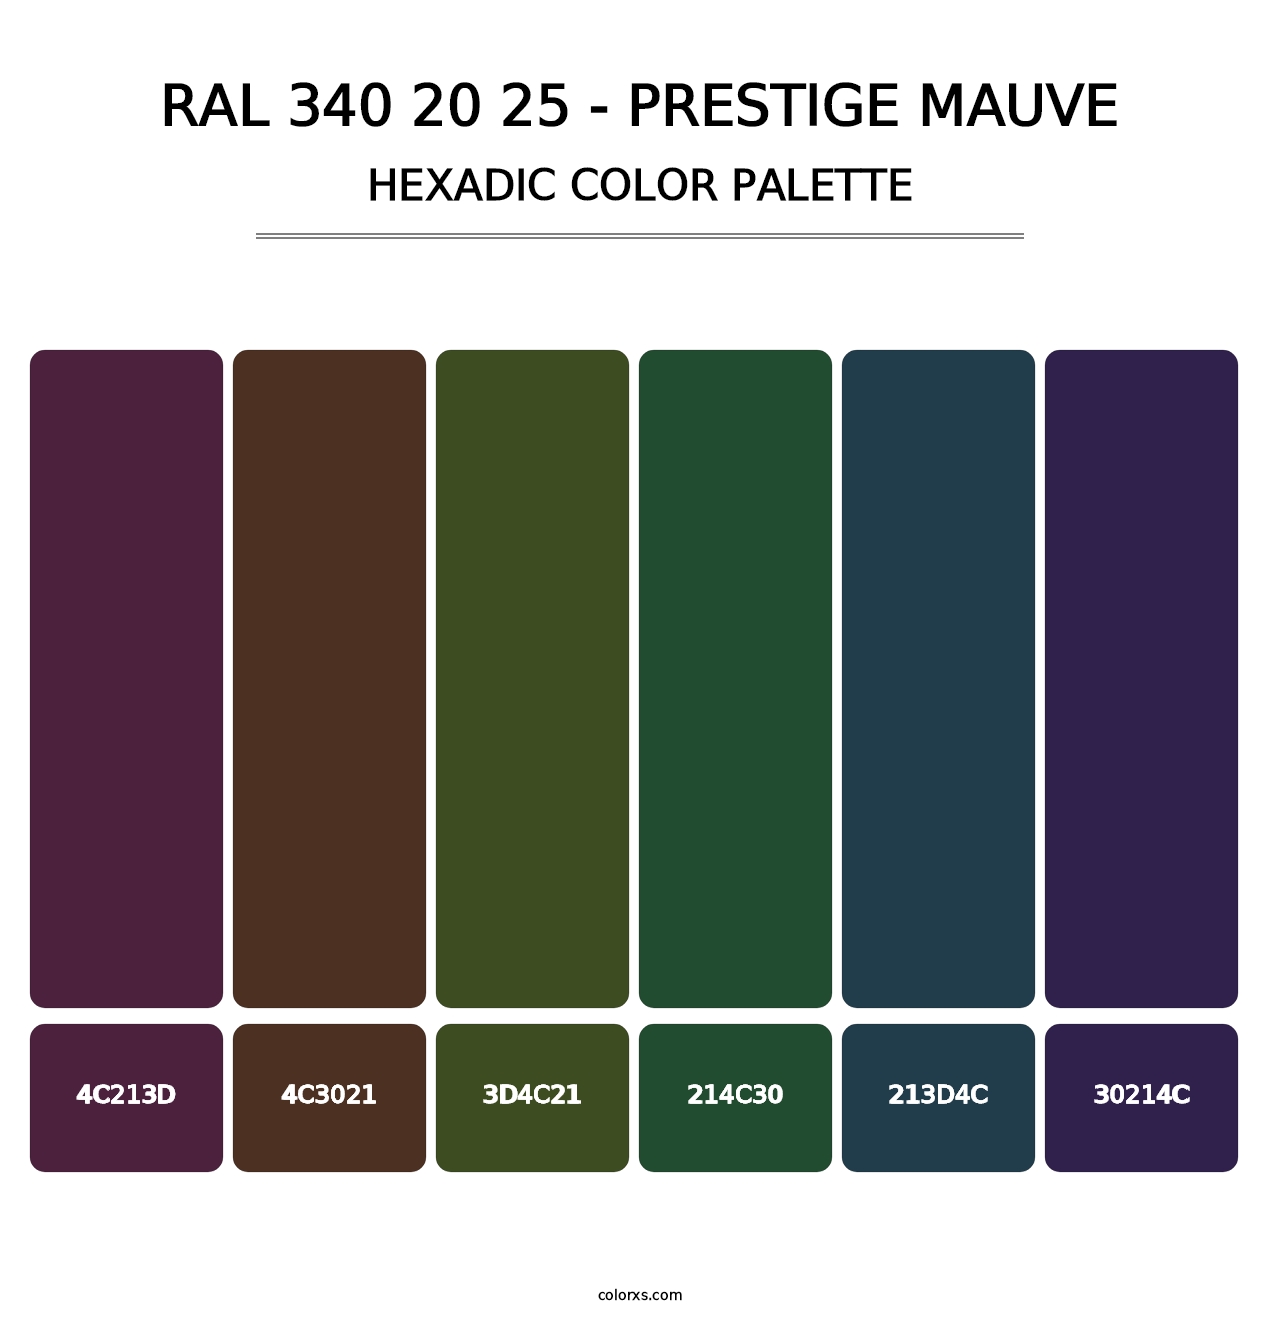 RAL 340 20 25 - Prestige Mauve - Hexadic Color Palette